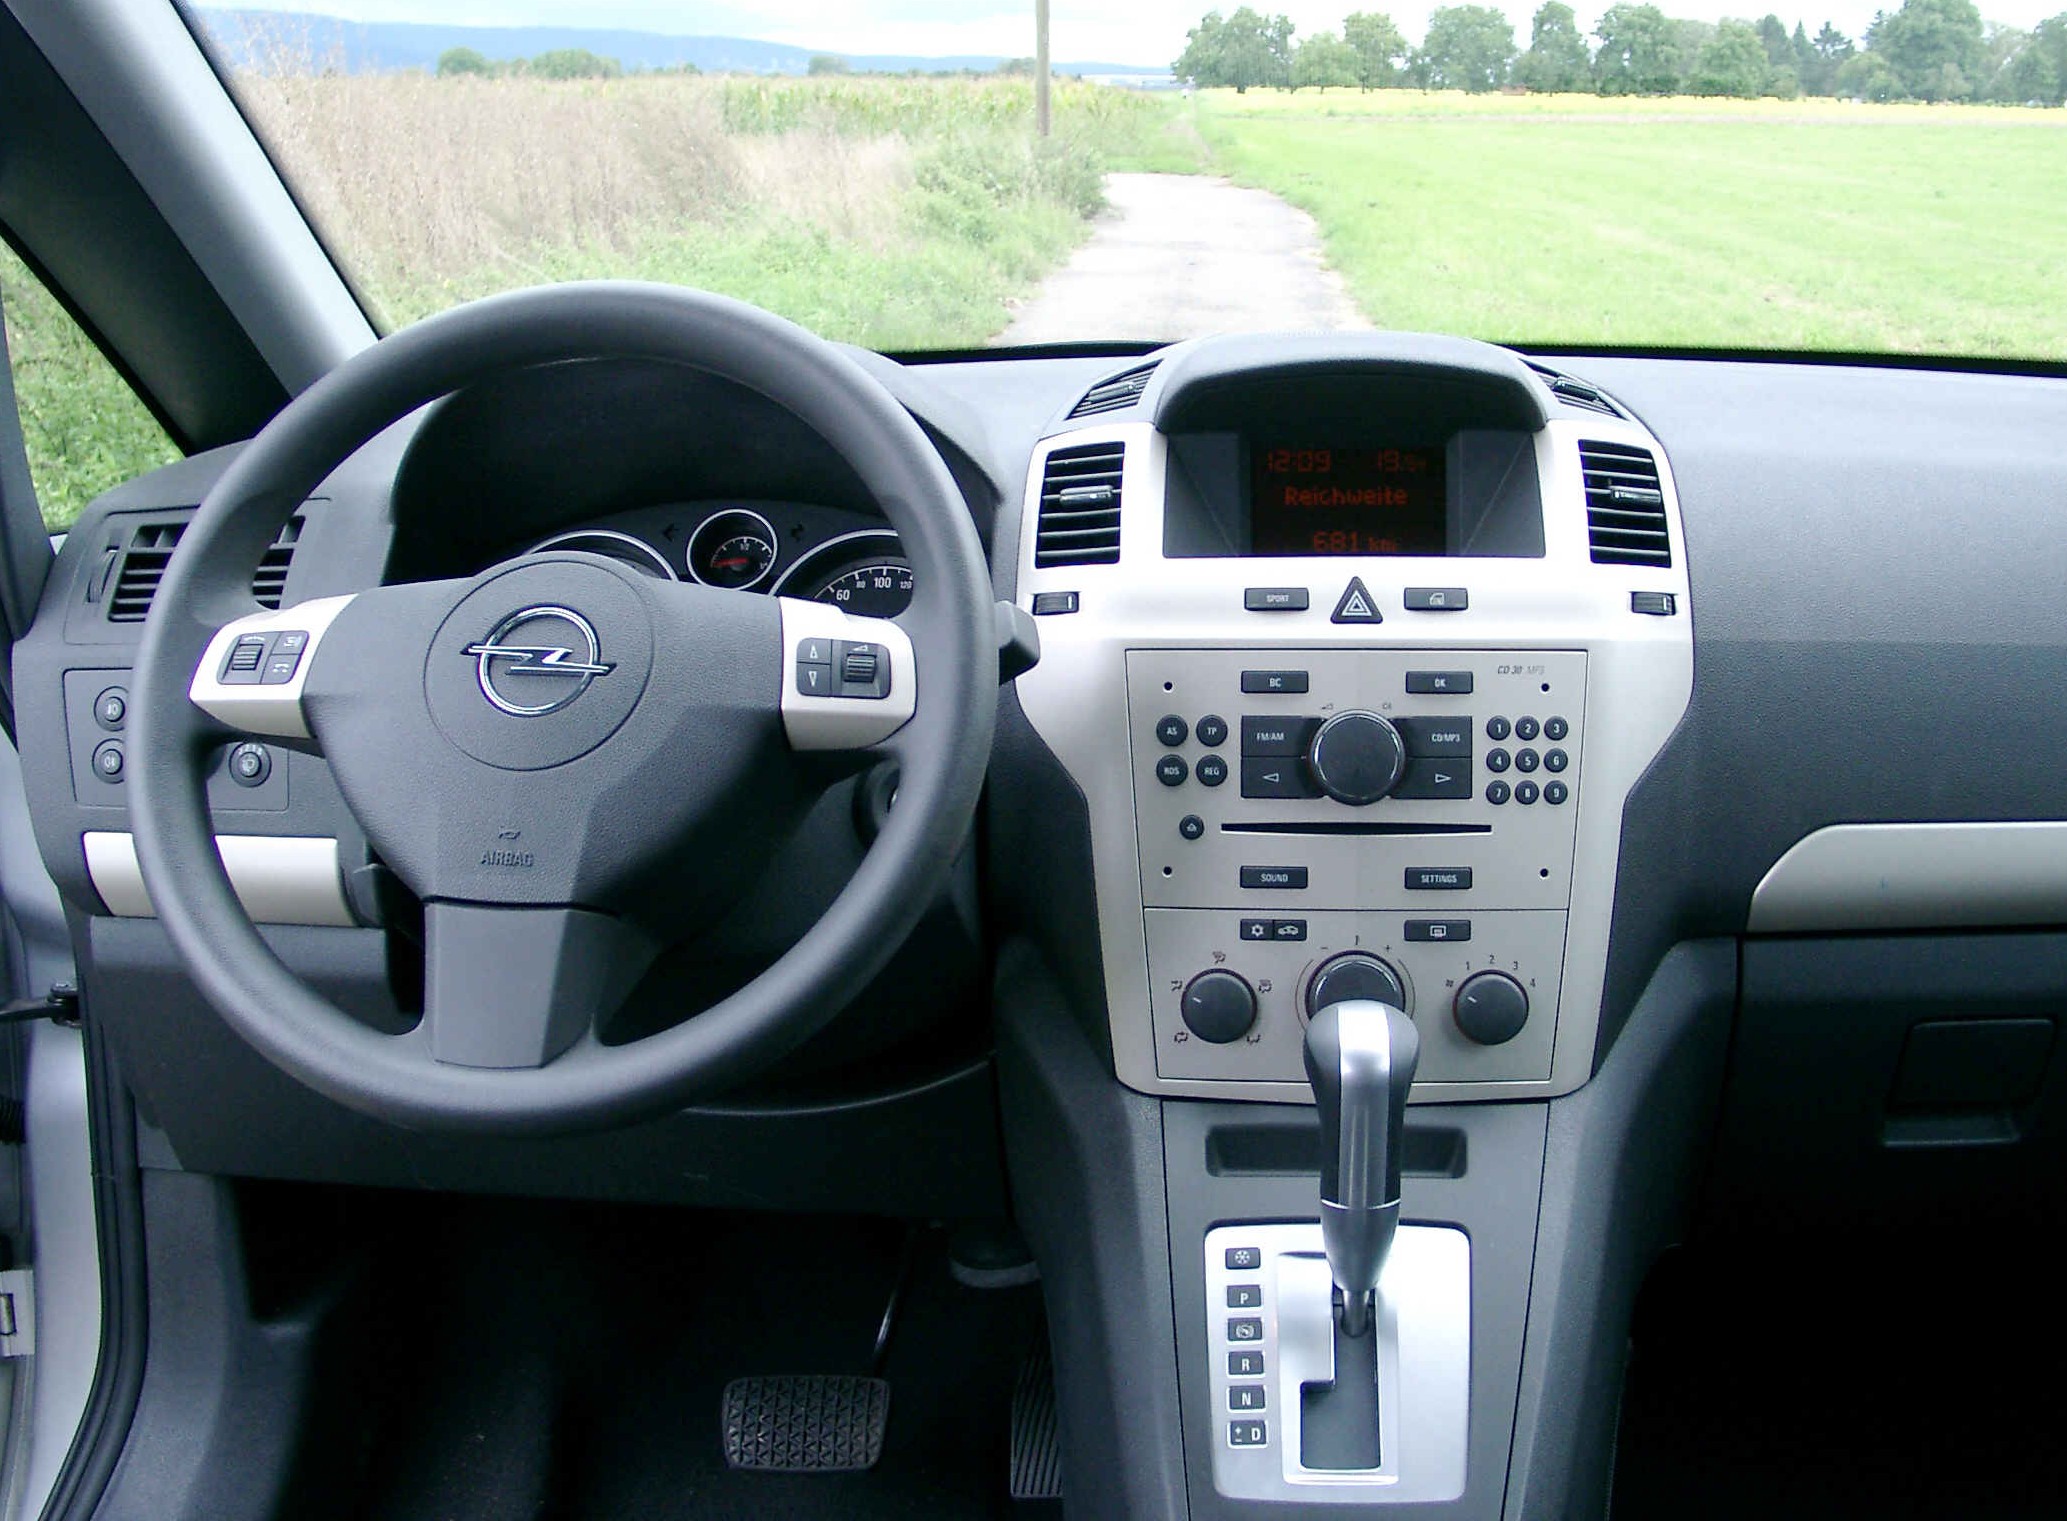 Opel Zafira inside 20080906